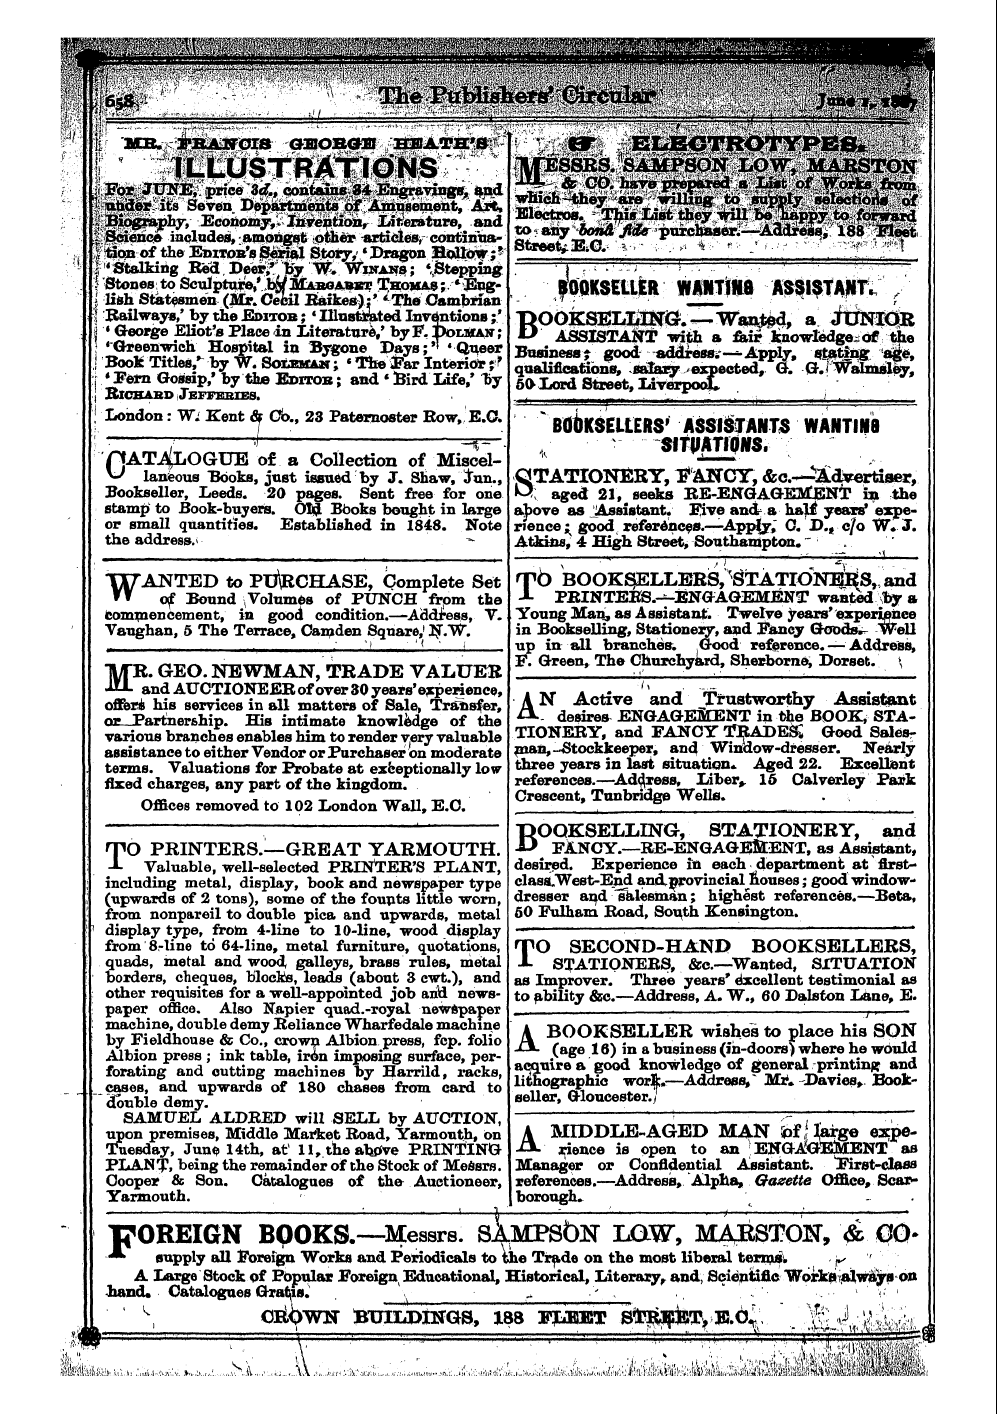 Publishers’ Circular (1880-1890): jS F Y, 1st edition - Ad05215